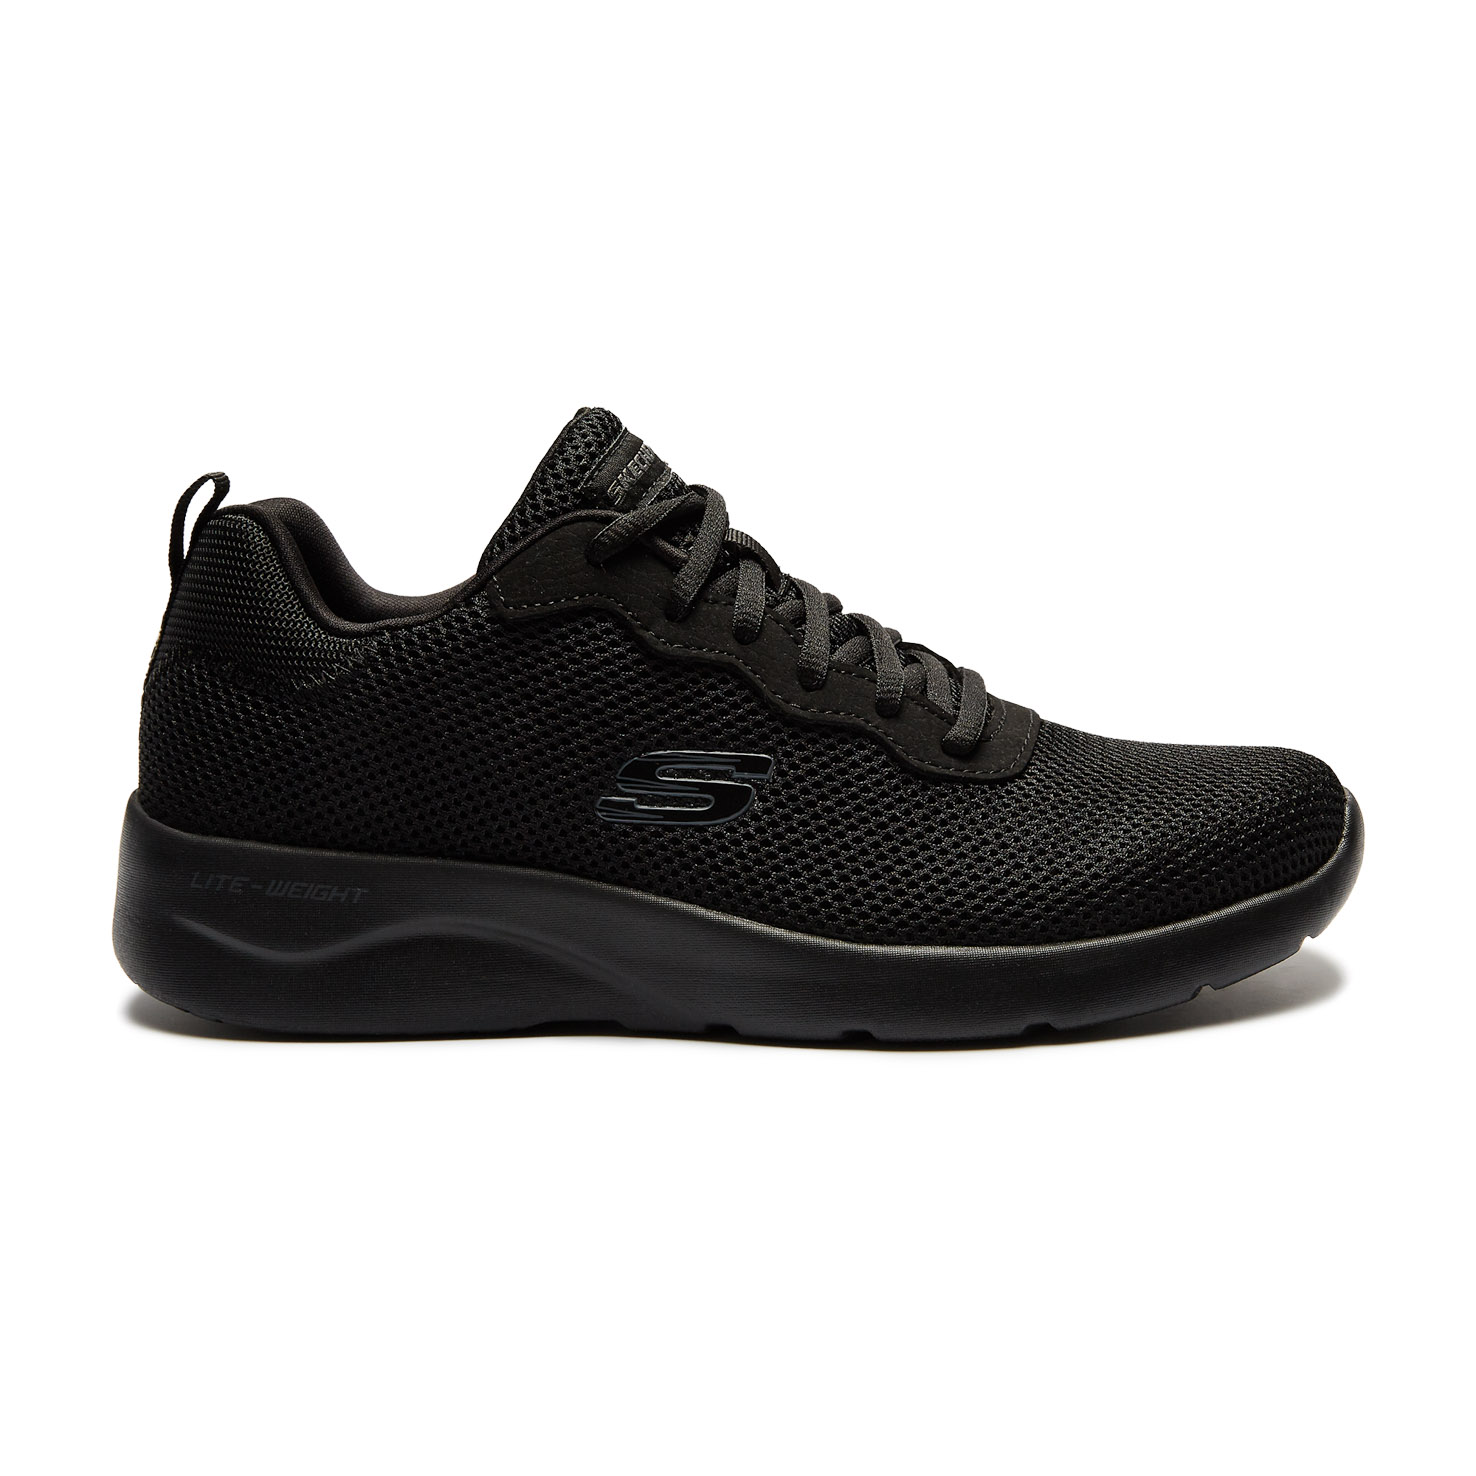 Men's low shoes SKECHERS, размер 41.5, цвет черный SK58362 - фото 1